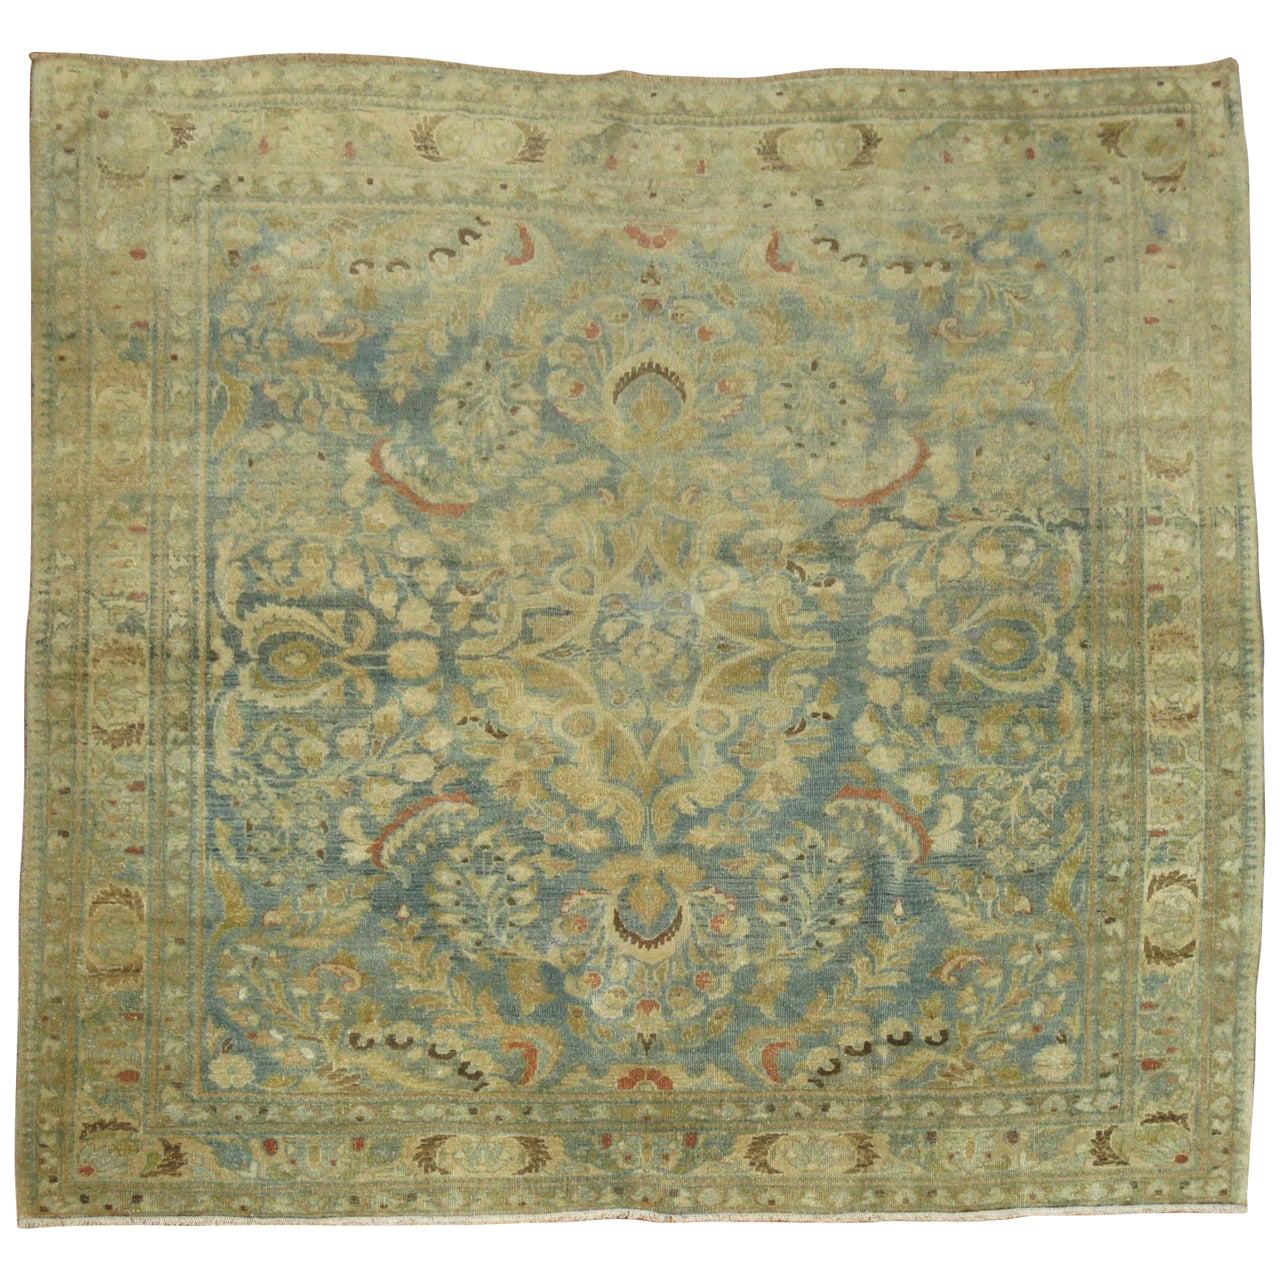 Antique Aqua Blue Color 4 foot Square Persian Traditonal Formal Sarouk Rug For Sale